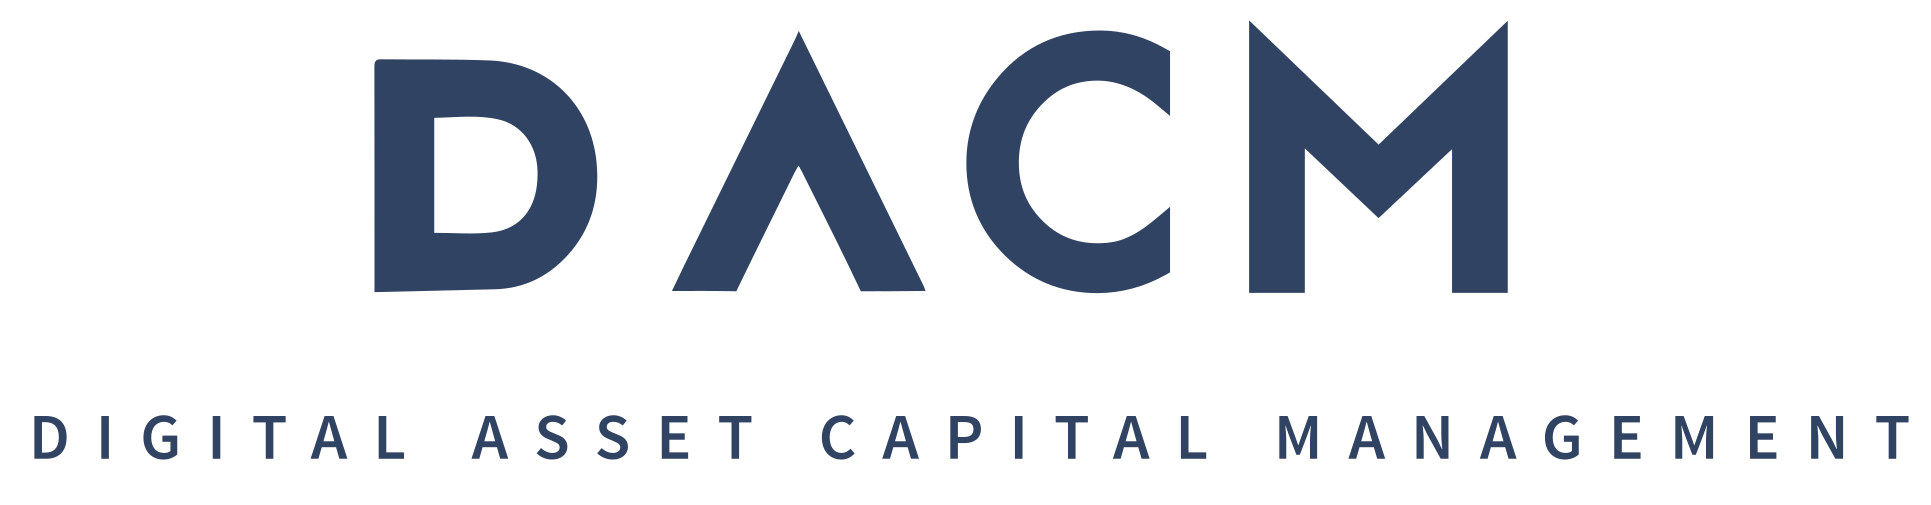 Digital Asset Capital Management (DACM)